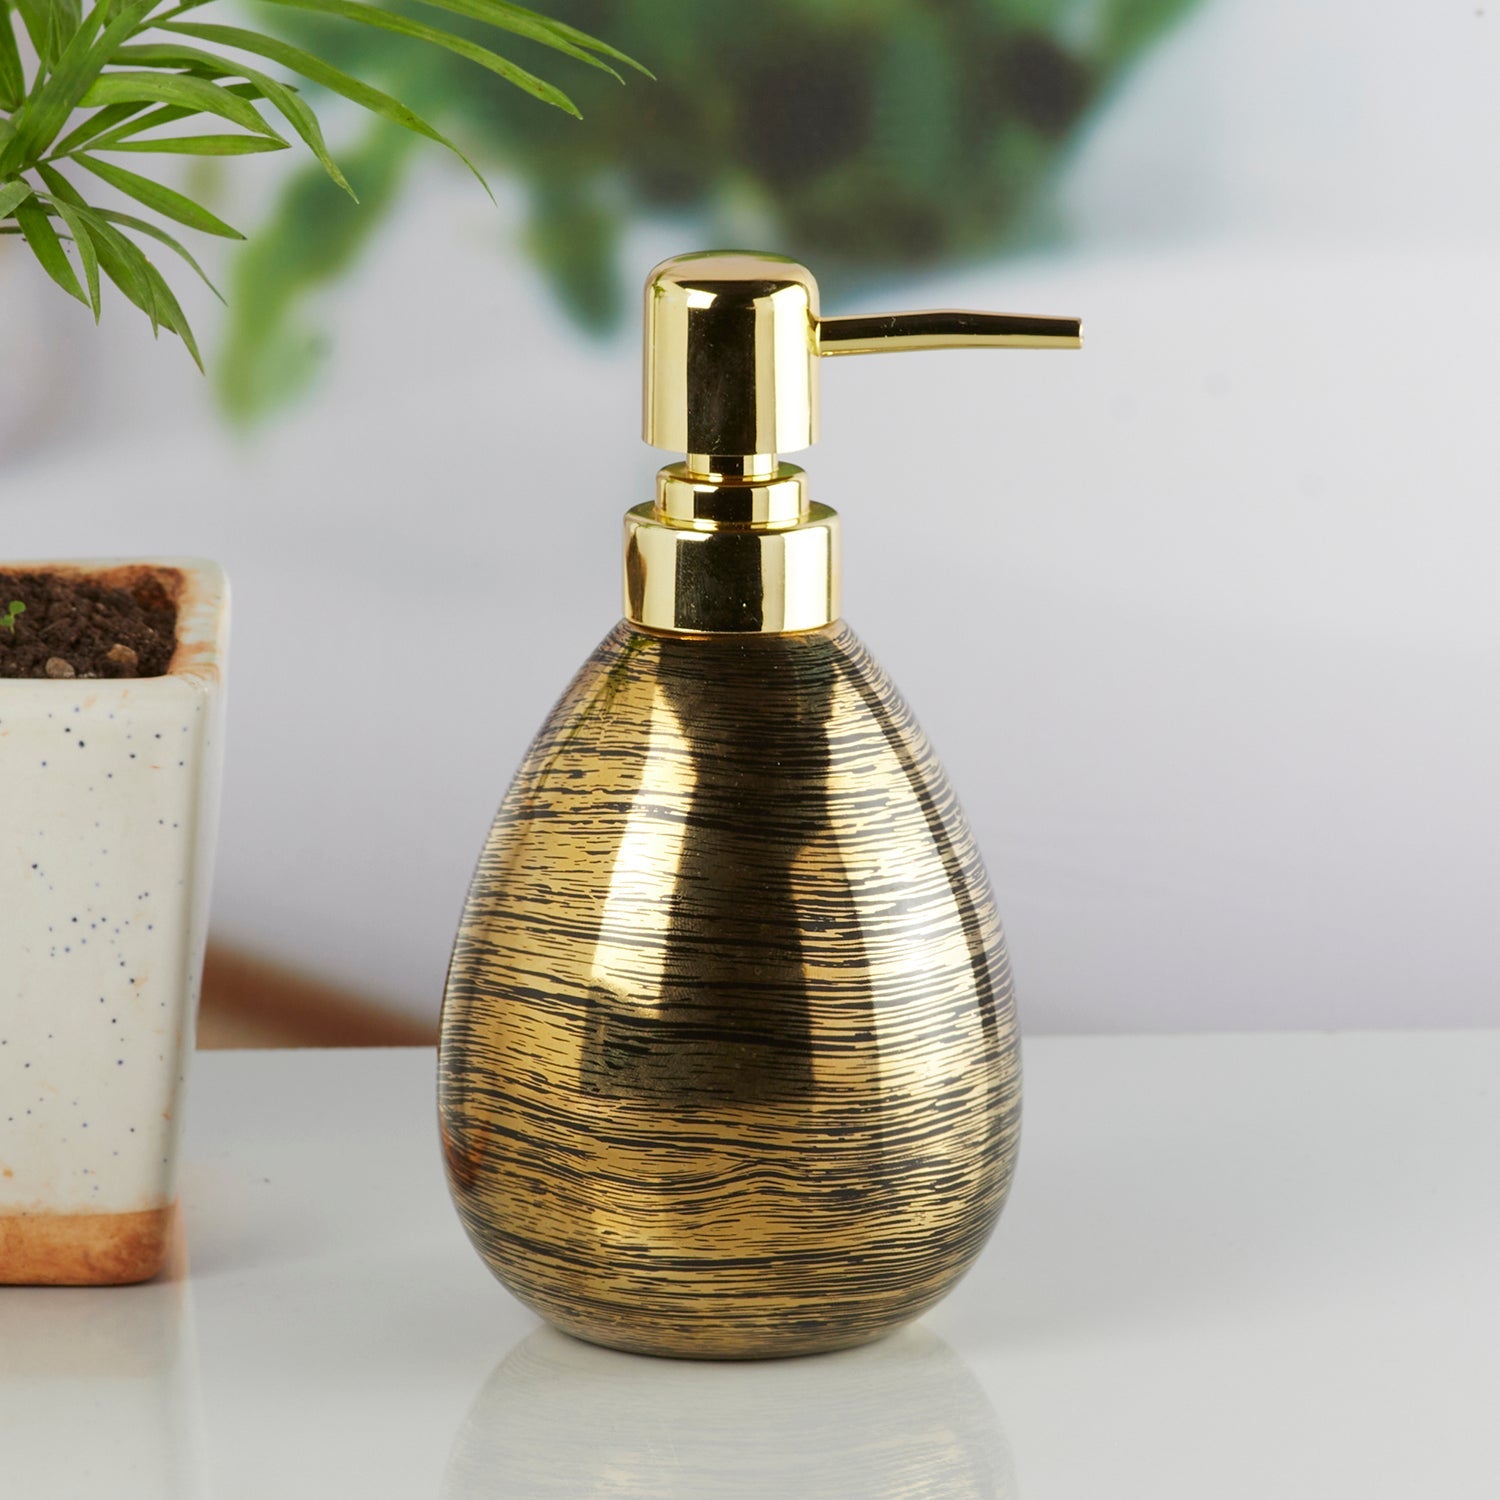 Ceramic Soap Dispenser handwash Pump for Bathroom, Set of 1, Silver (10310)